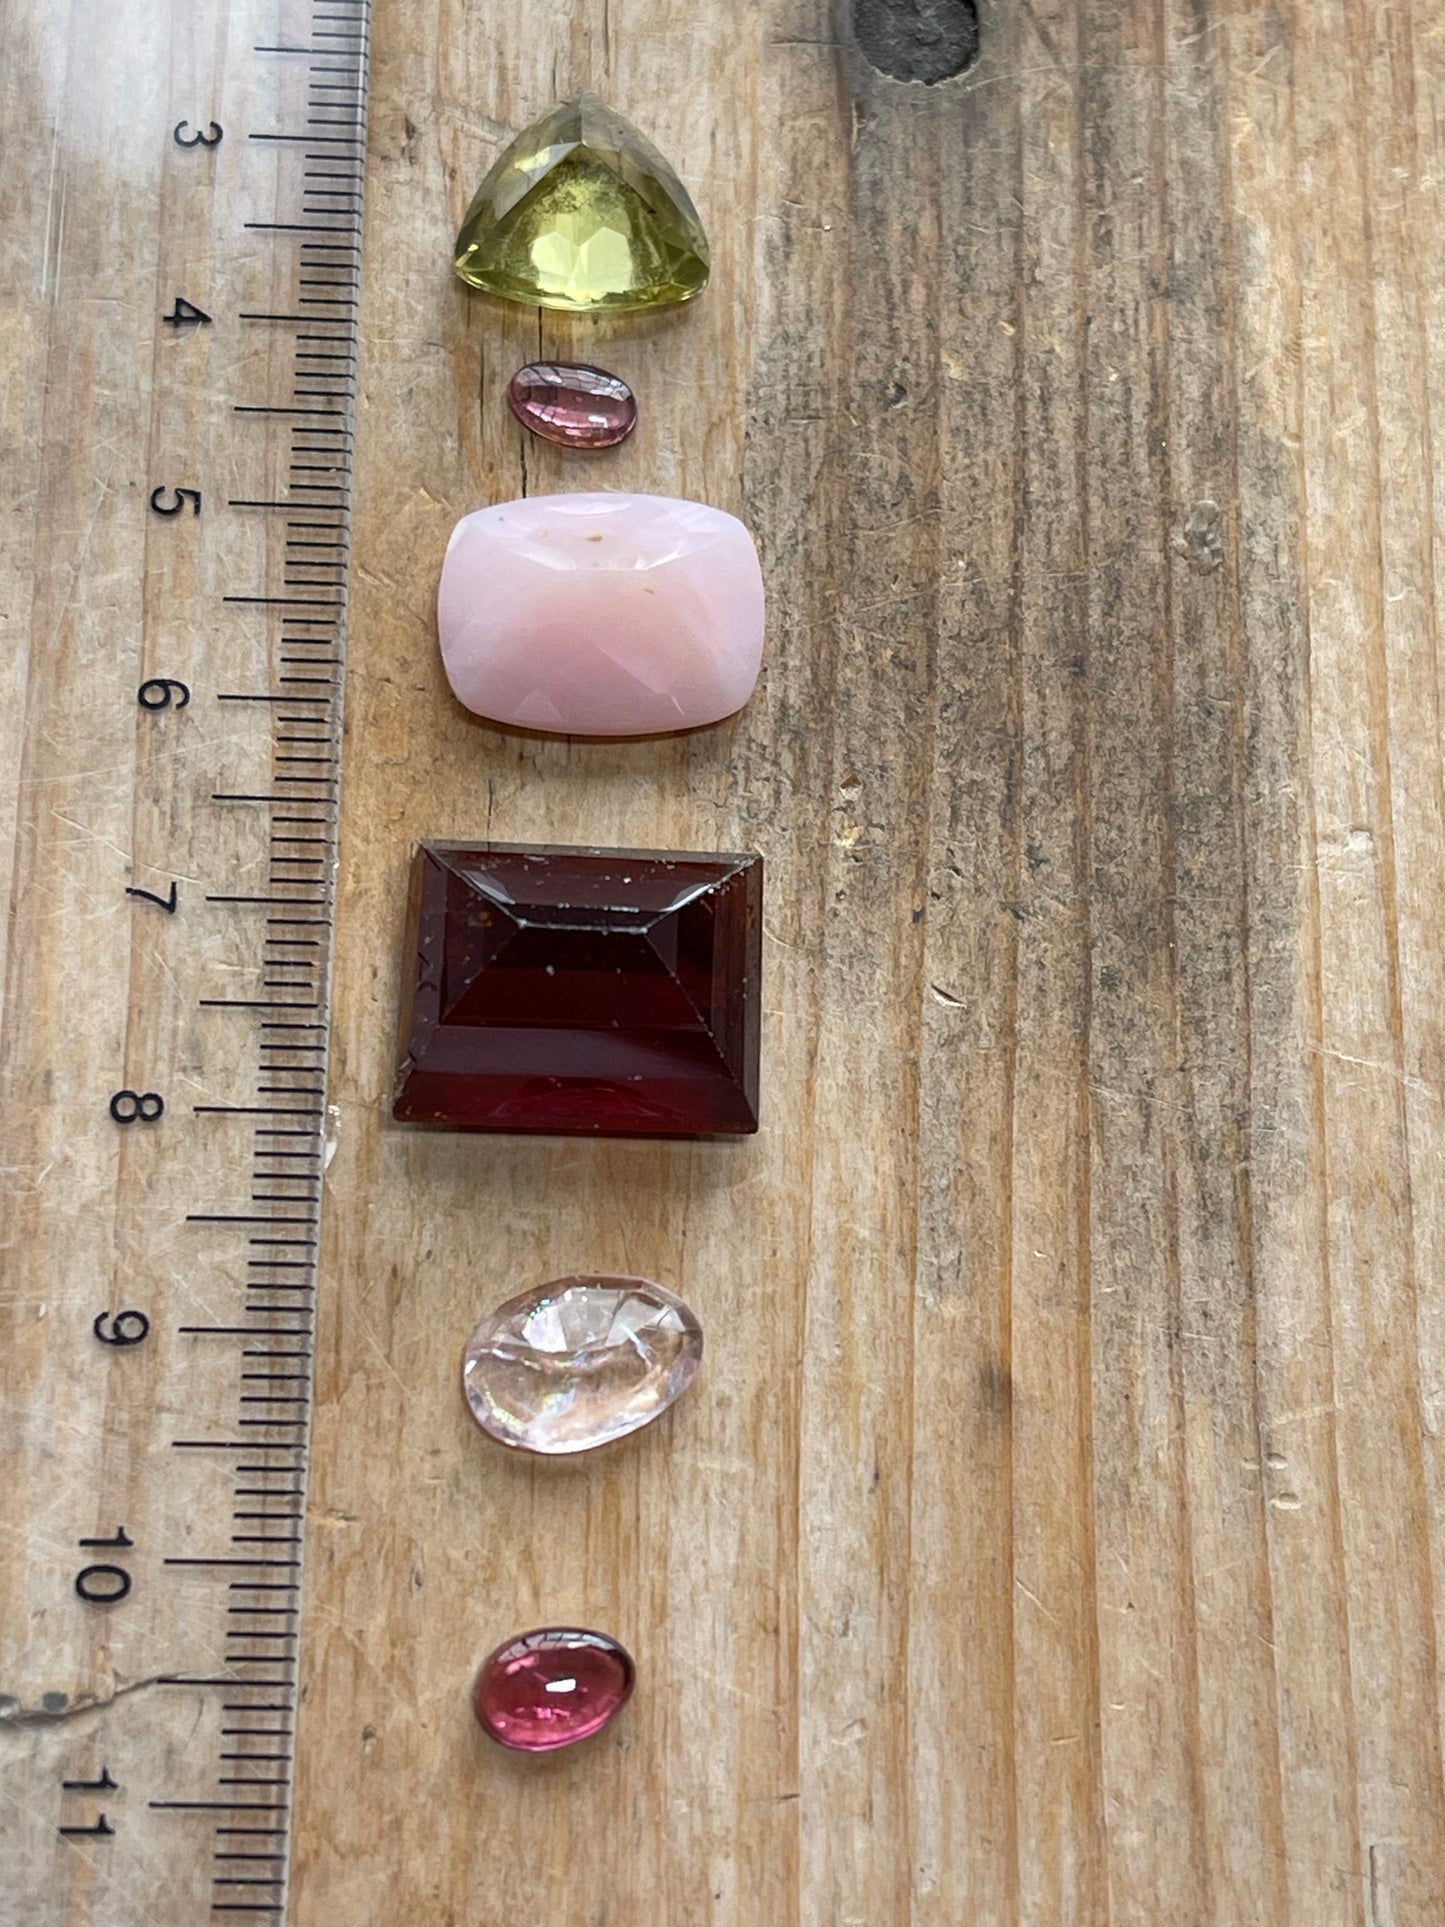 Gemstone Collection 56: Hessonite, Lemon Quartz, Rose Quartz, Pink Onyx, Rainbow Tourmaline - 32CT